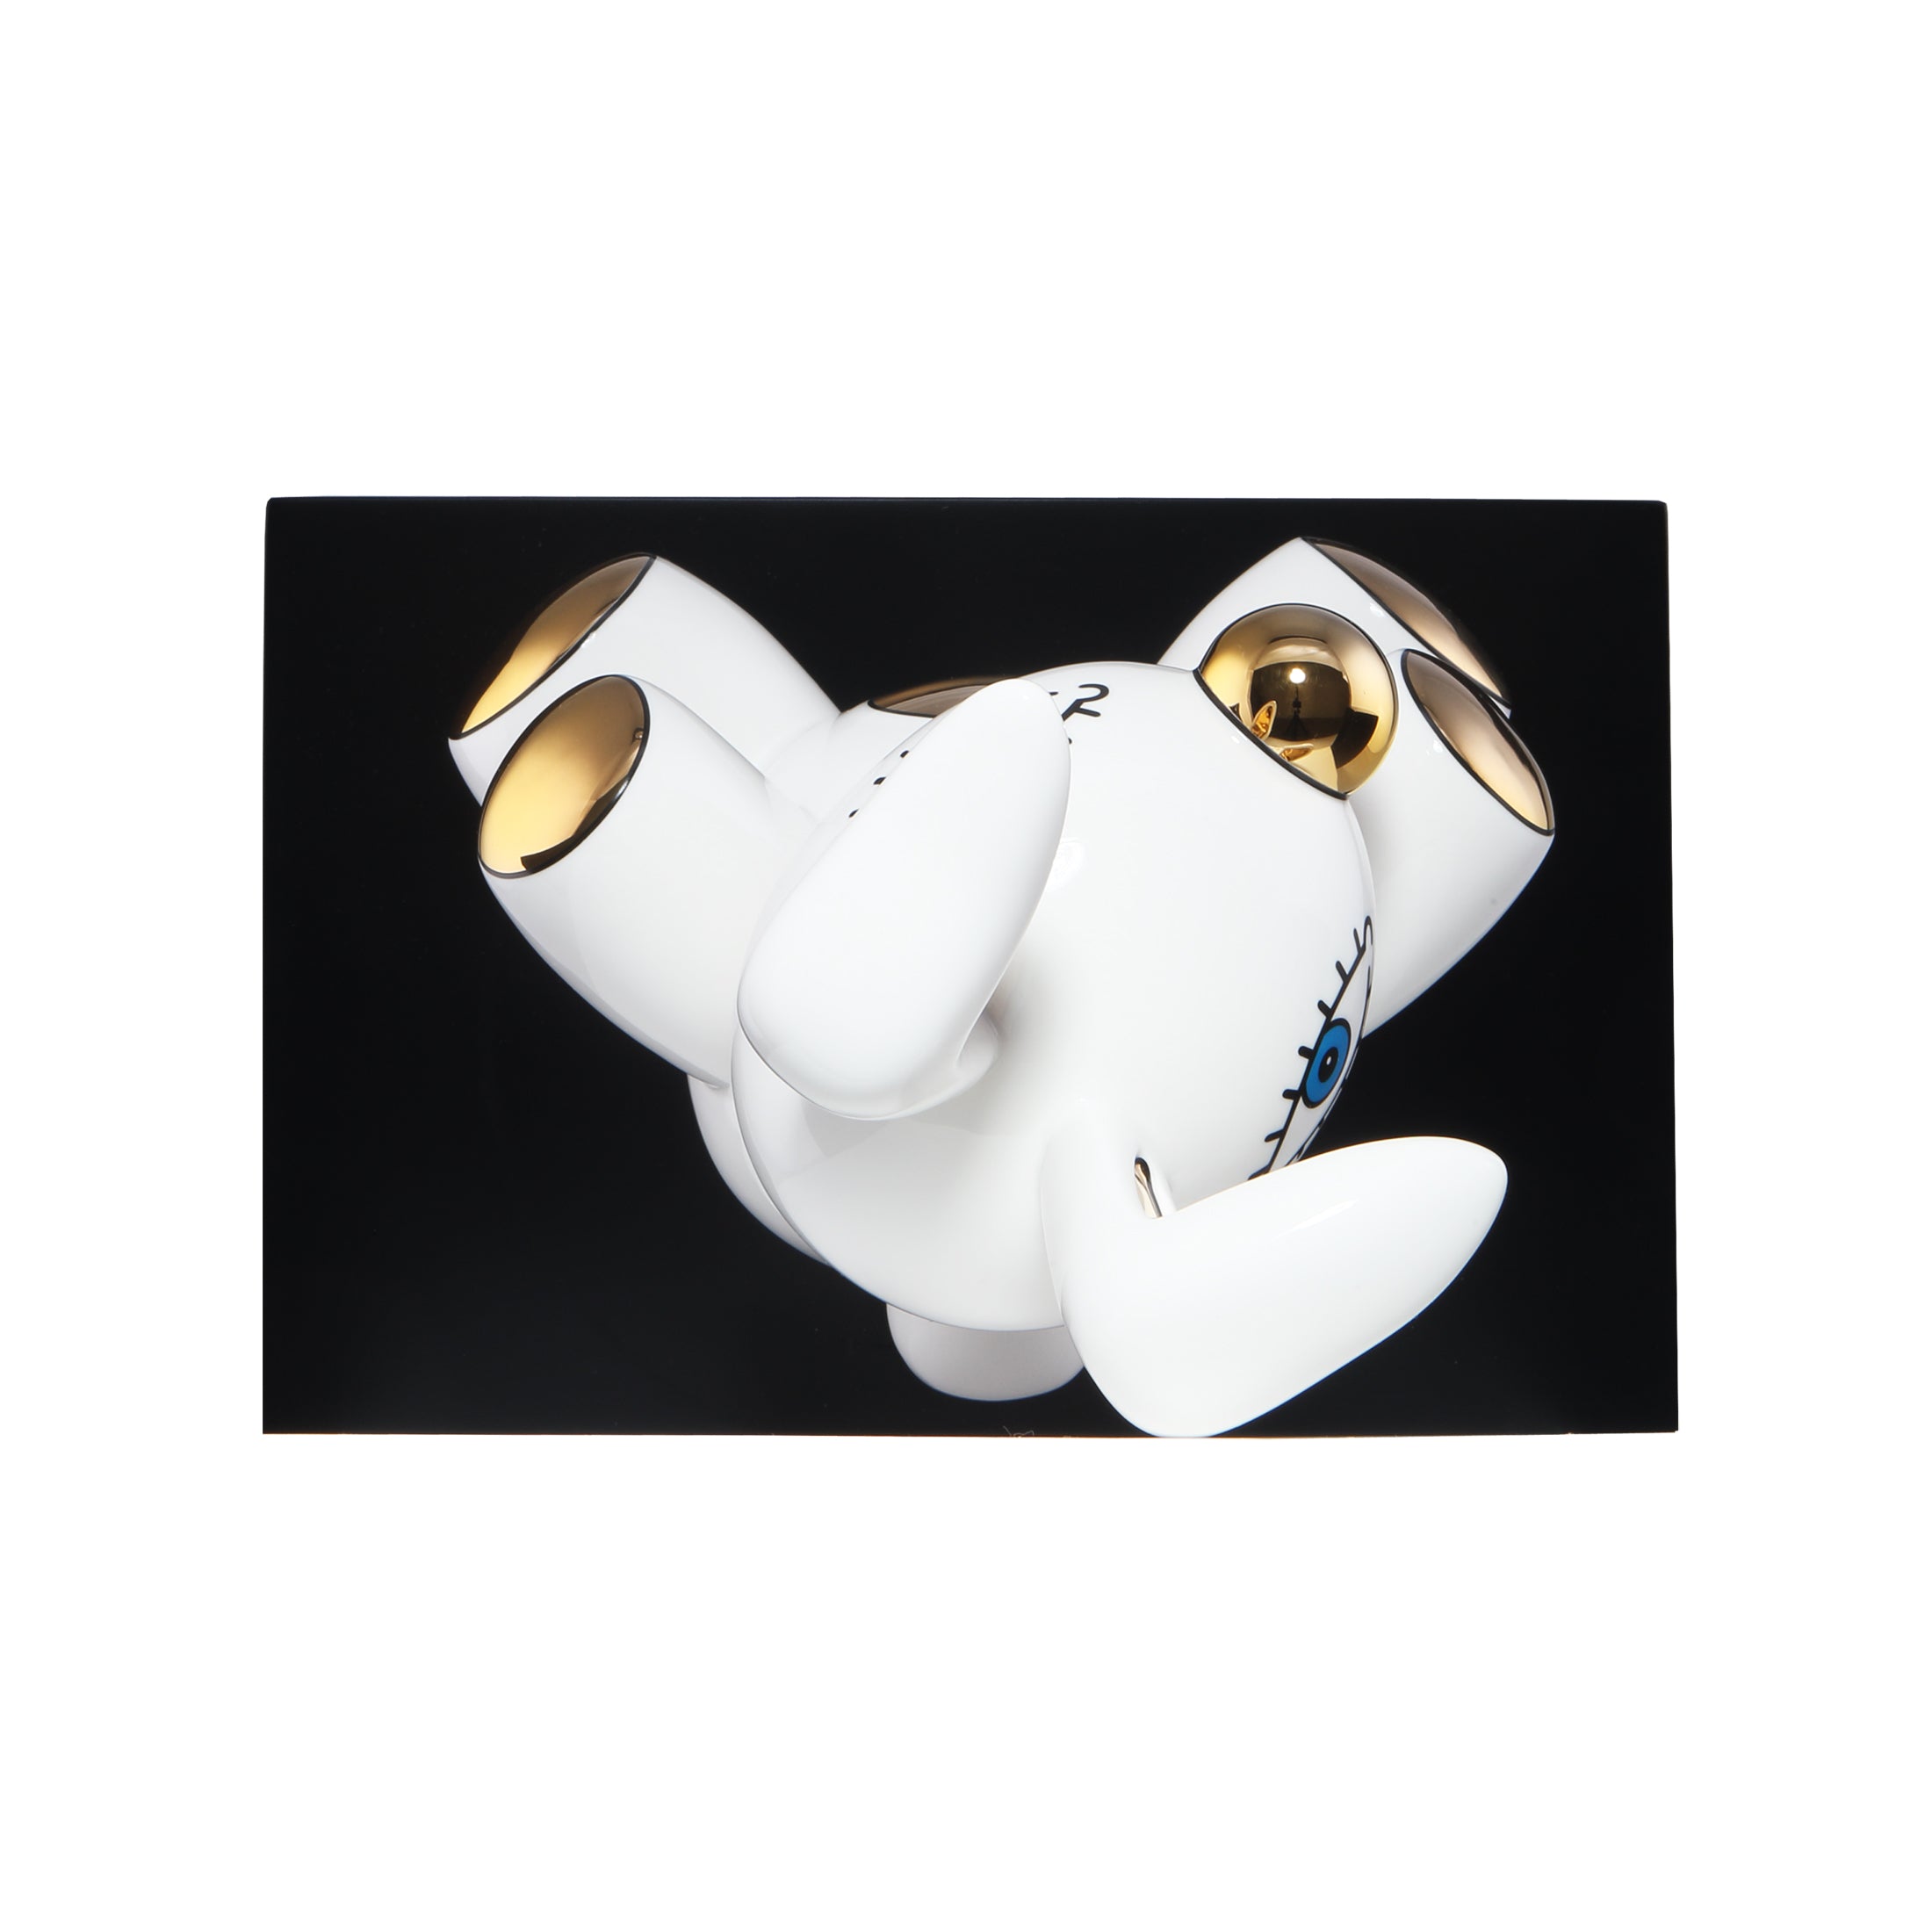 Goebel Pop Art Figur "Magic Bunny" 29,5cm v. Mauro Bergonzoli (limited edition)